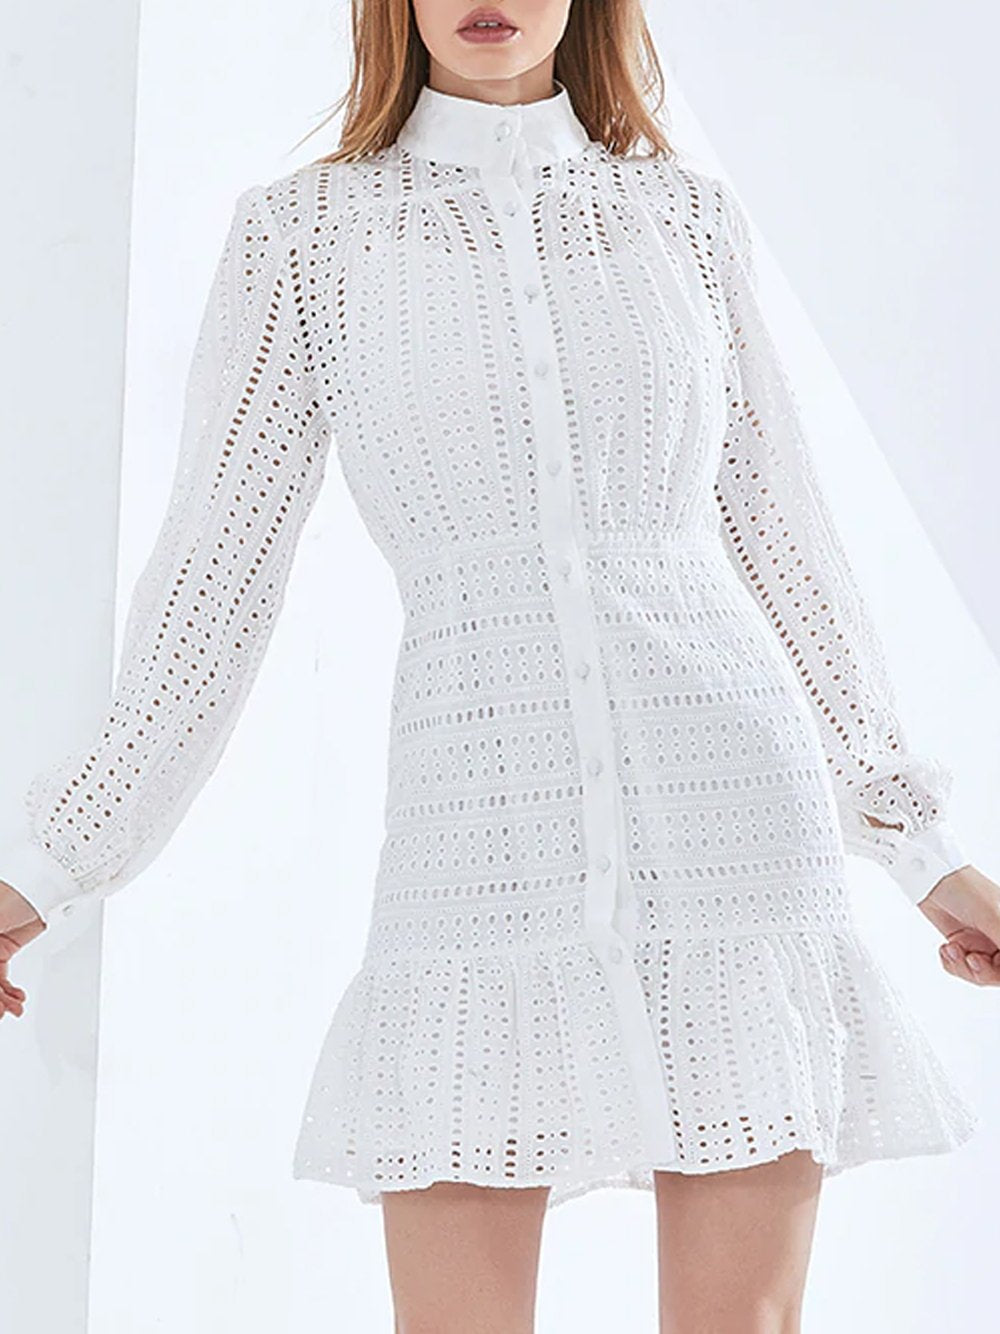 NORA Lace Mini Dress in White